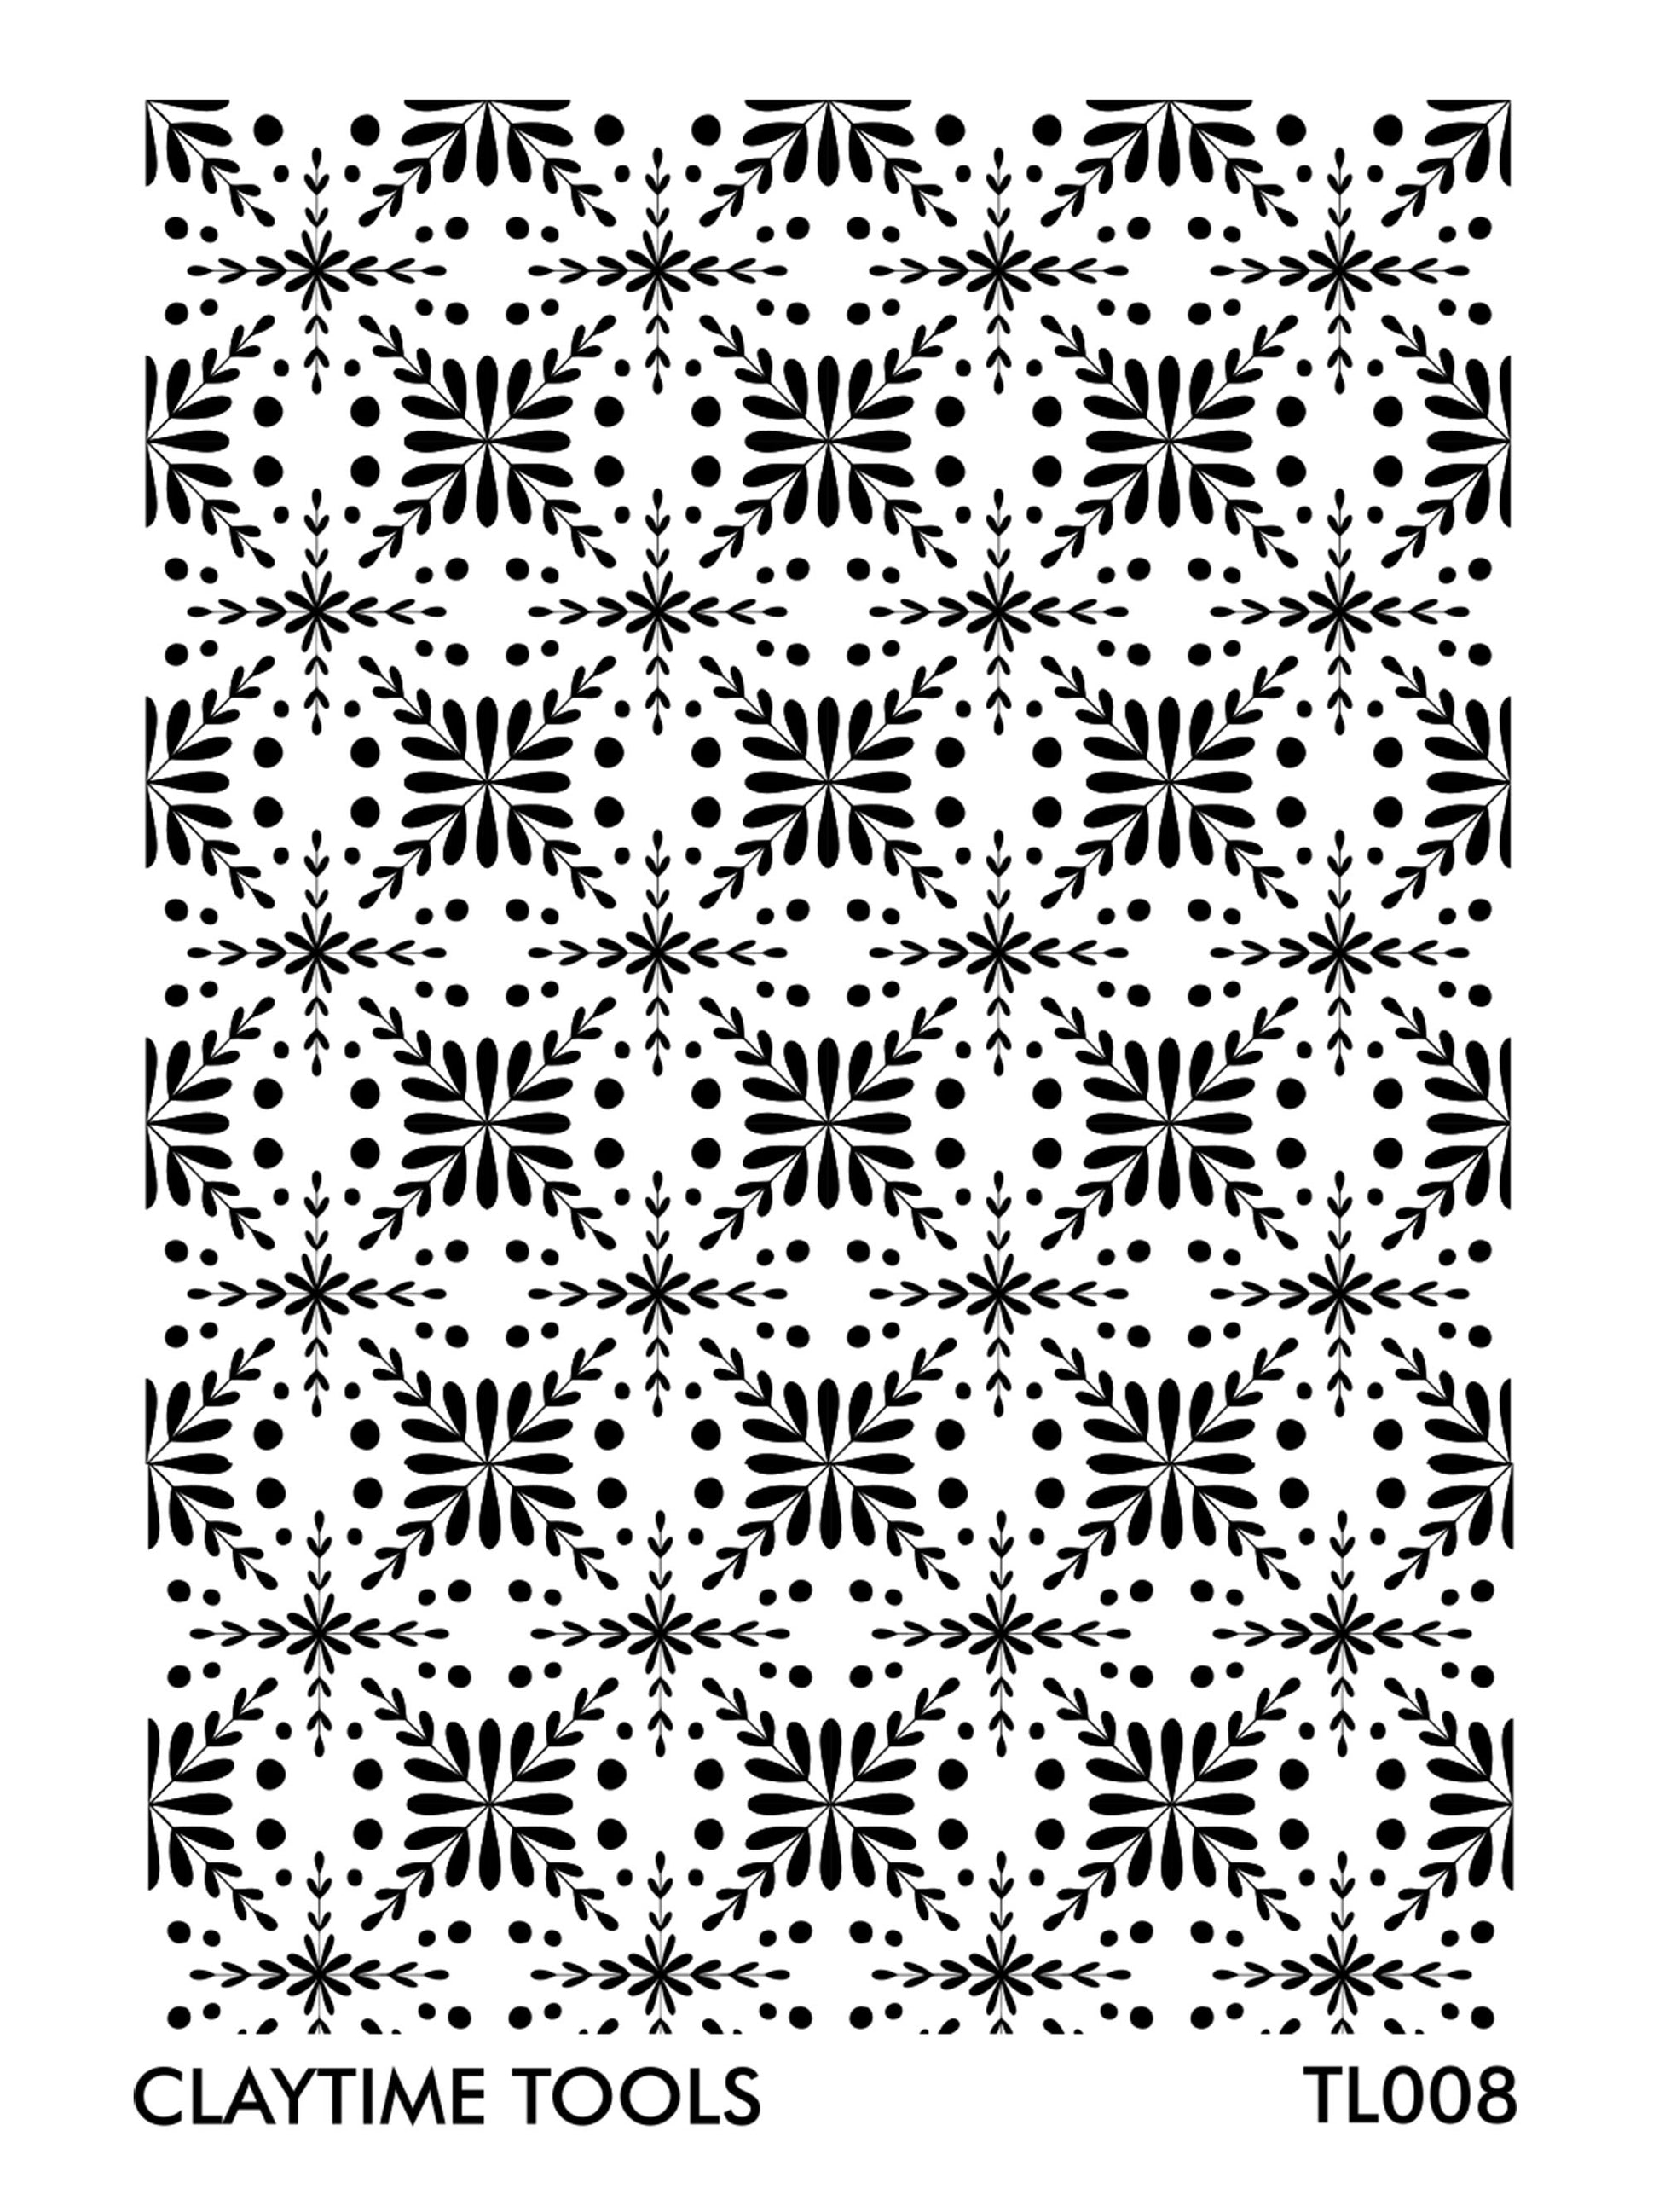 Snowflake tile pattern silkscreen on a black and white background.